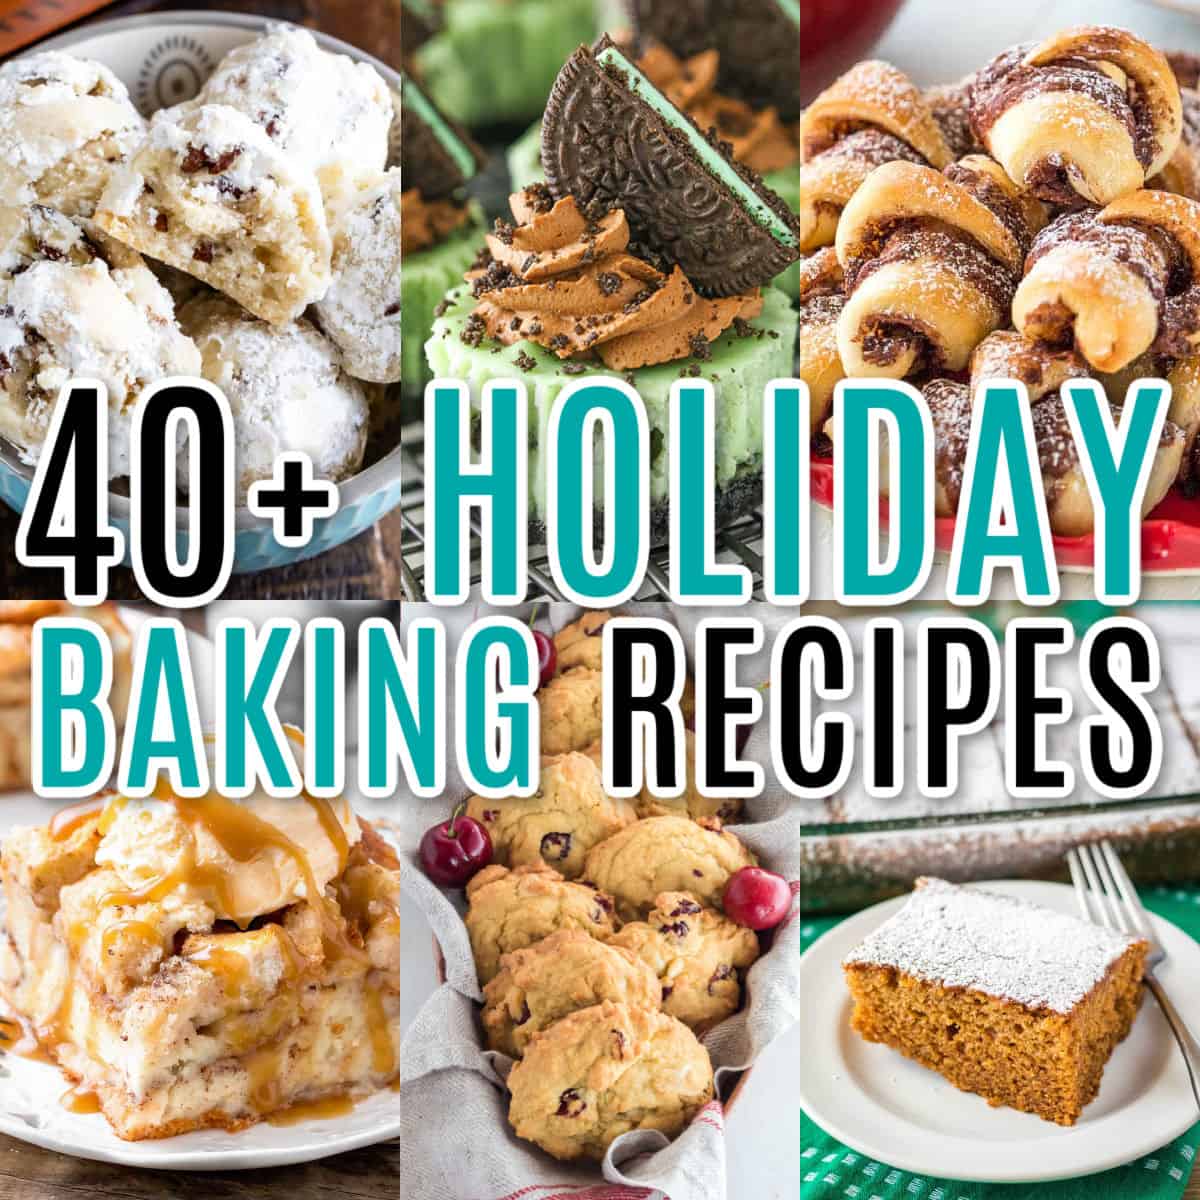 https://realhousemoms.com/wp-content/uploads/40-Holiday-Baking-Recipes-SQUARE-2020-.jpg